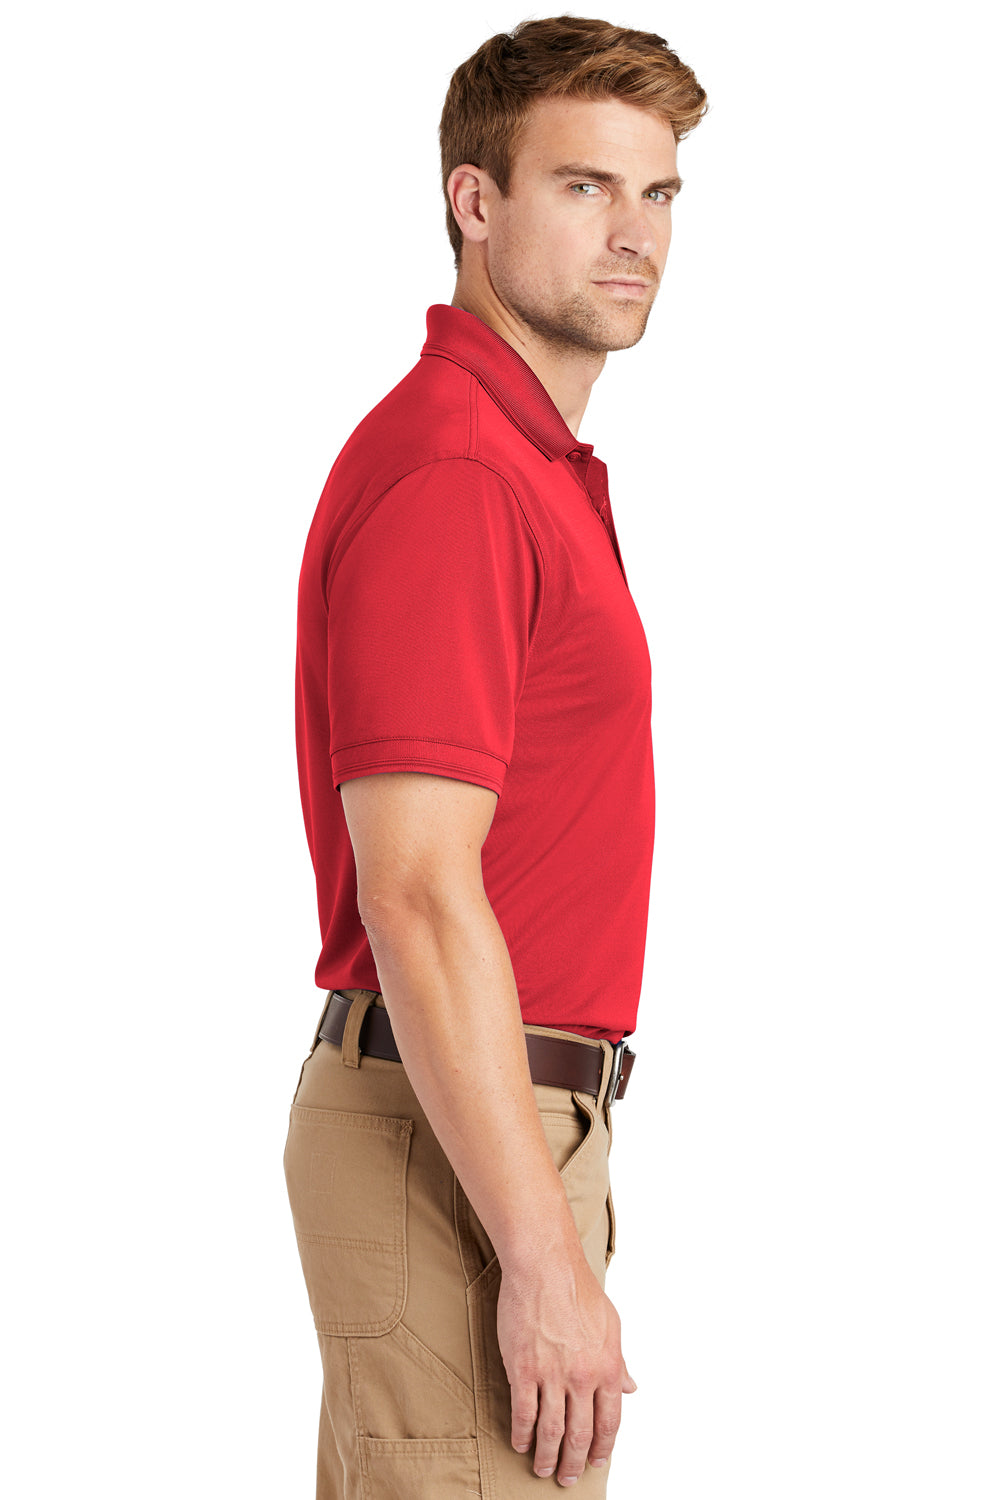 CornerStone CS4020 Mens Industrial Moisture Wicking Short Sleeve Polo Shirt Red Side